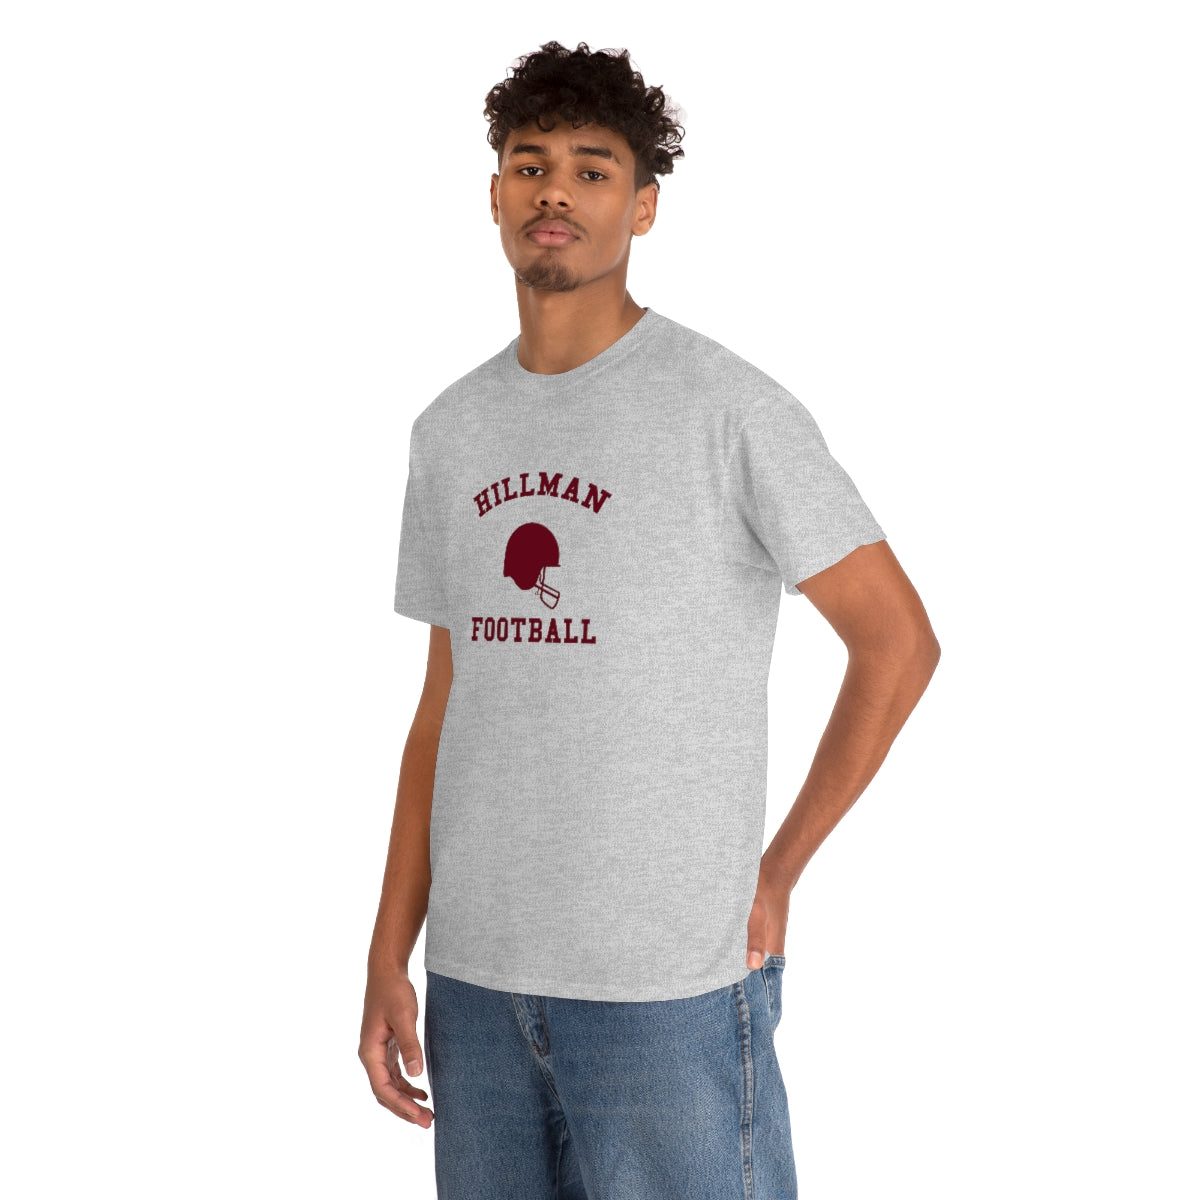 Hillman Football: Maroon Lettering Unisex Short Sleeve Tee